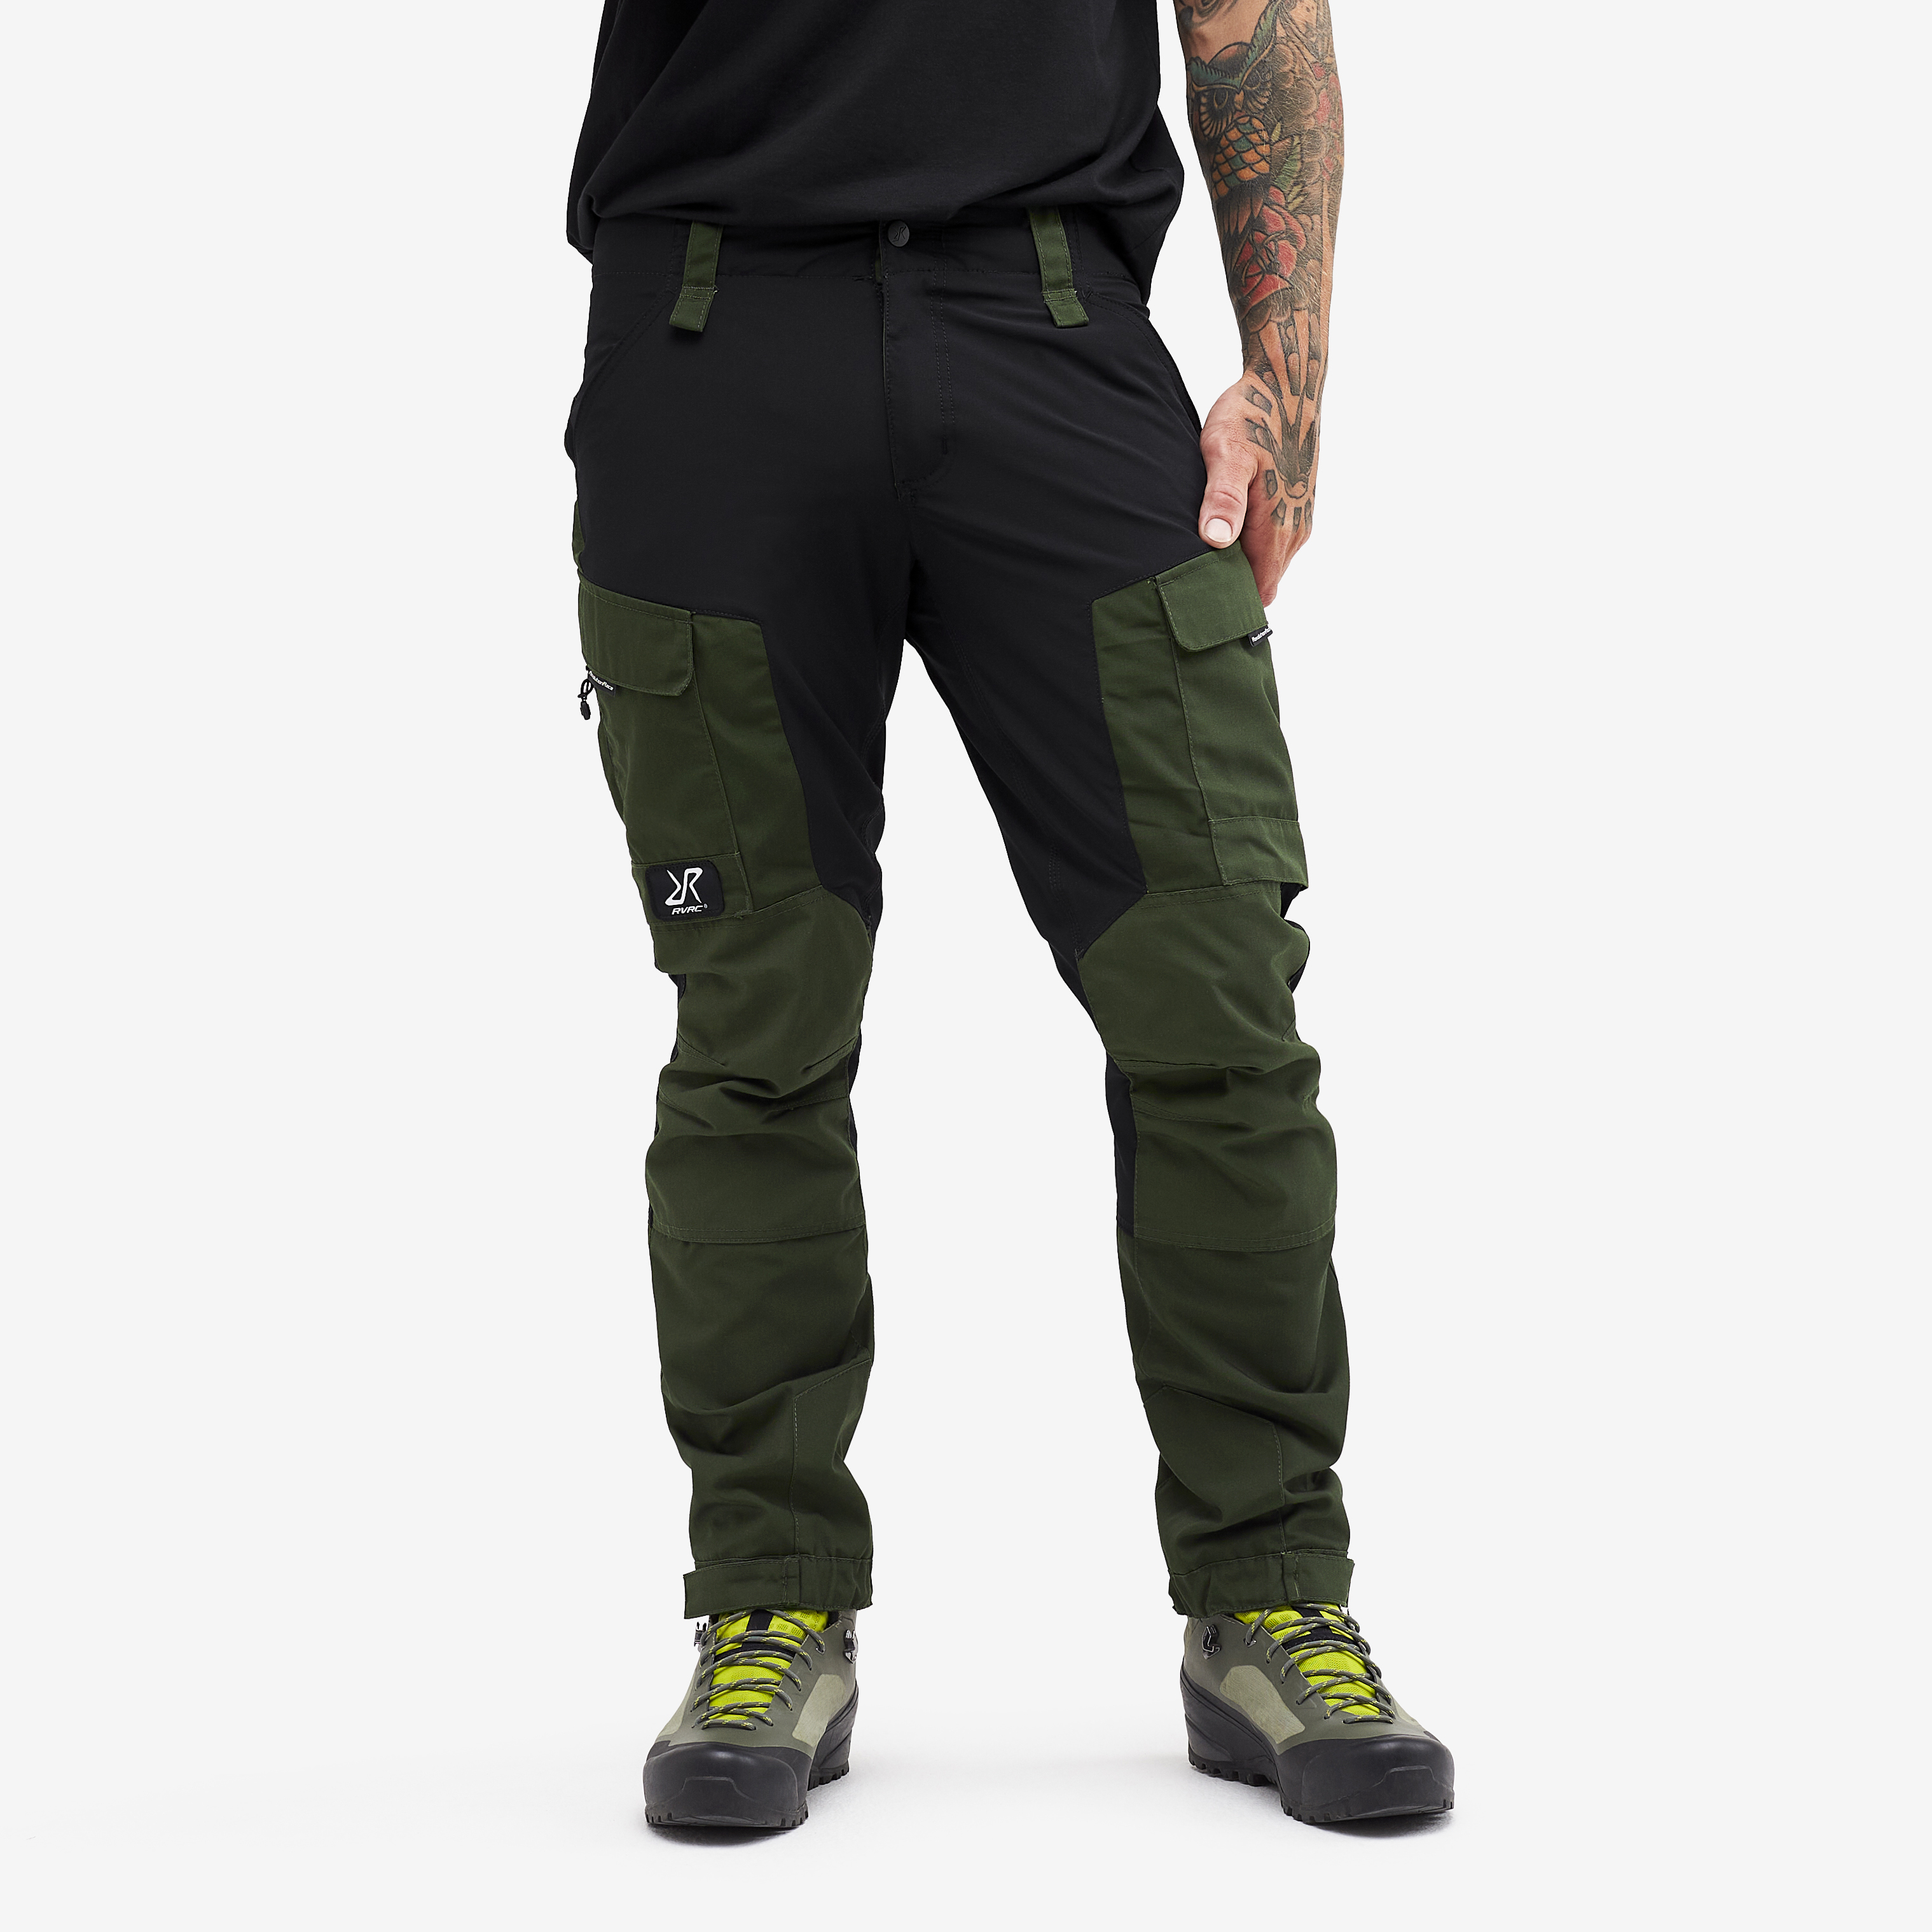 RVRC GP Short walking trousers for men in green